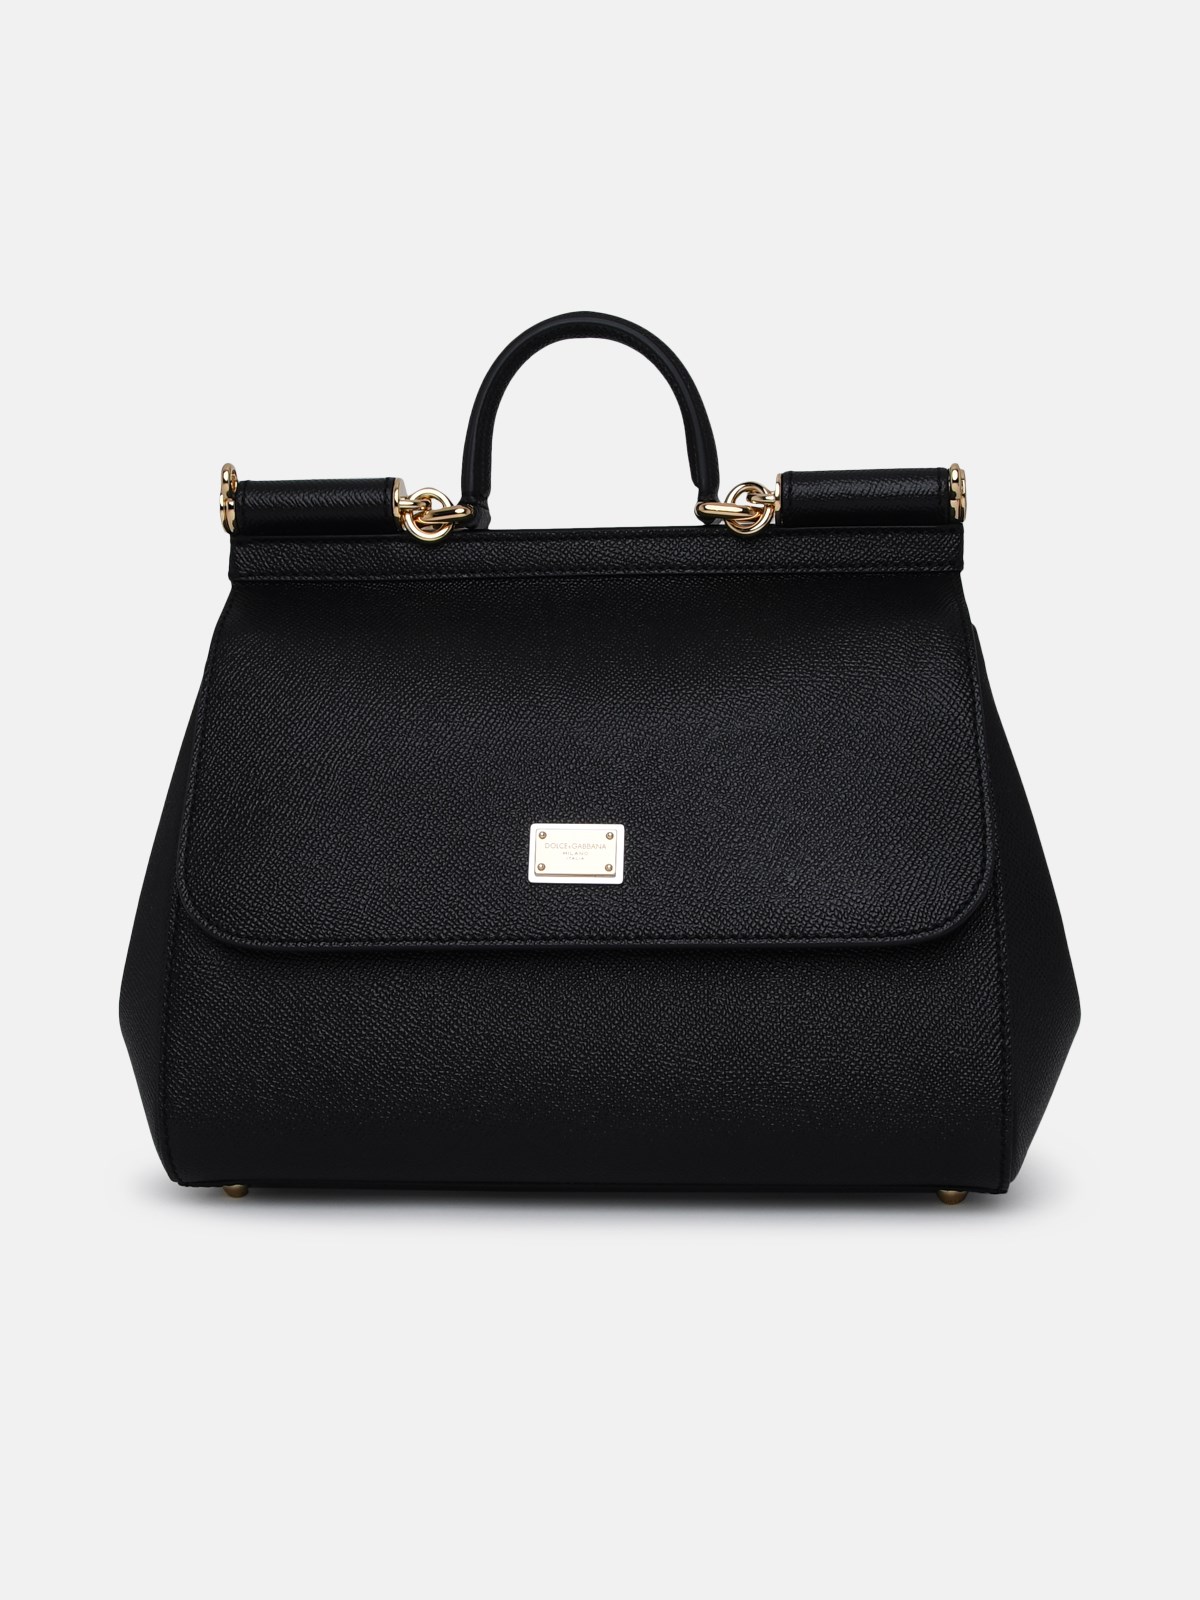 Dolce & Gabbana Sicily Lace Bag In Black